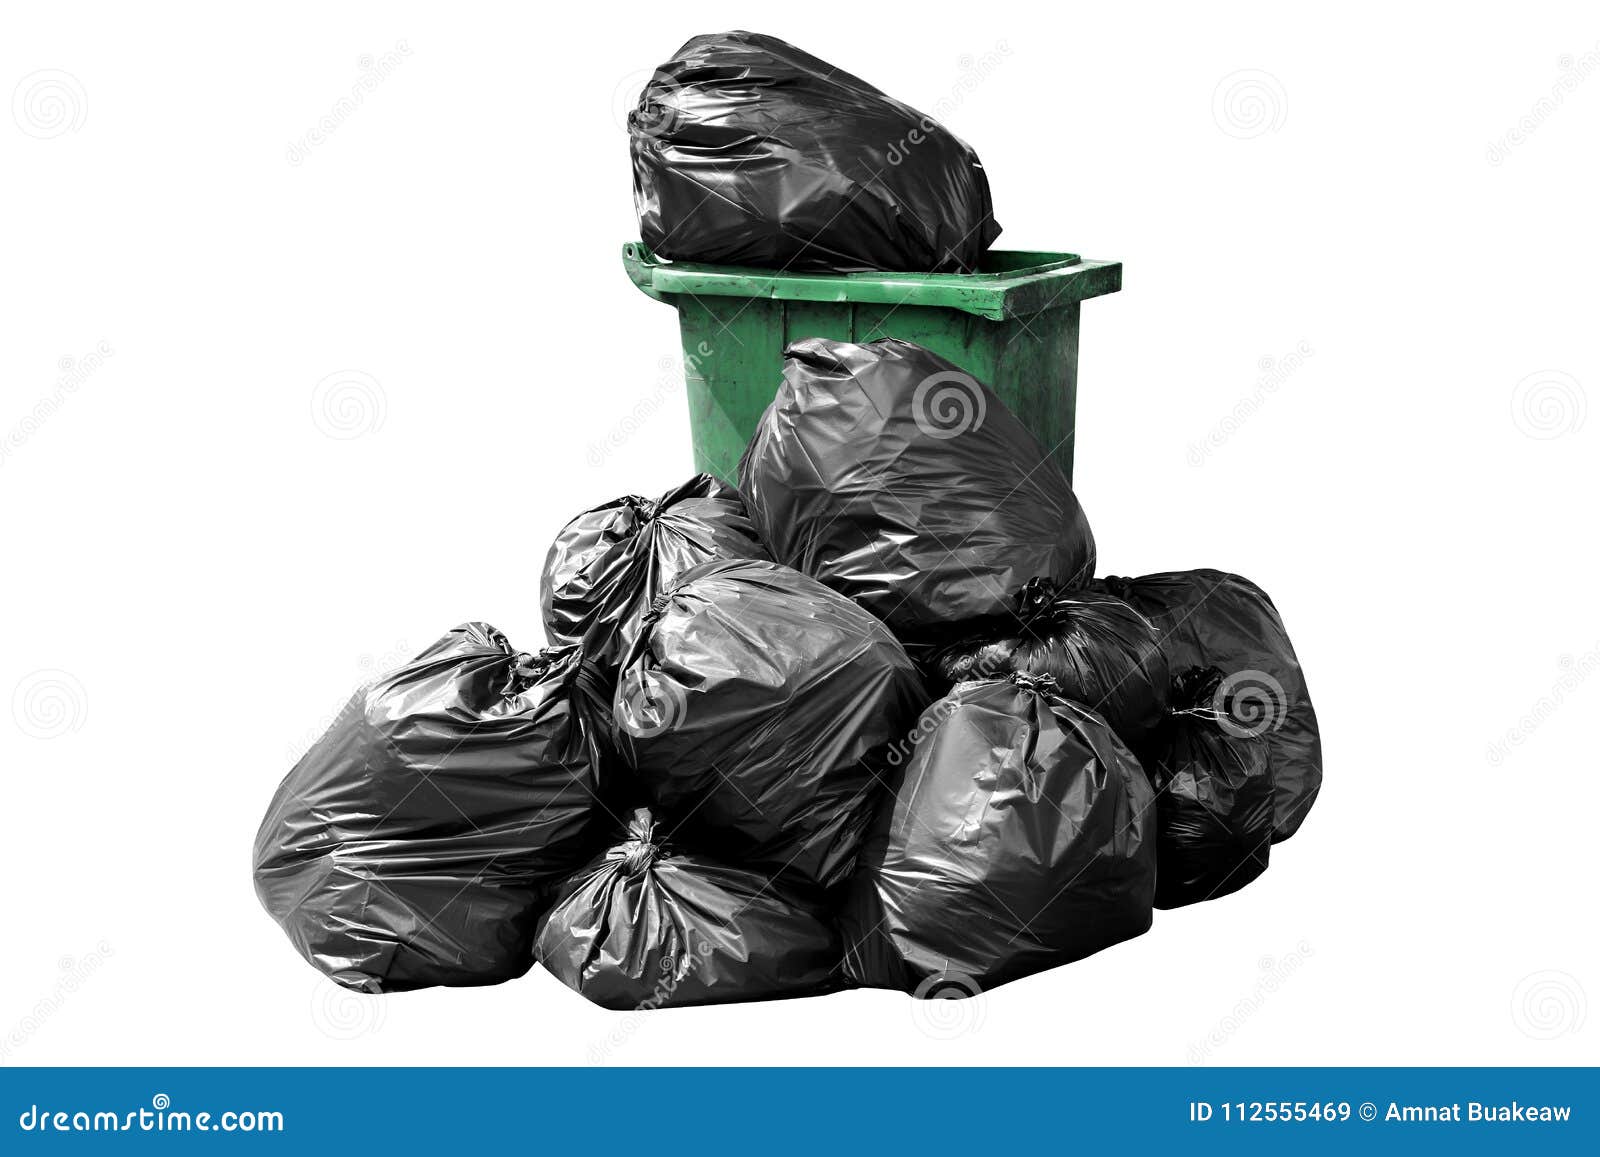 https://thumbs.dreamstime.com/z/bin-garbage-bag-green-bin-trash-garbage-rubbish-plastic-bags-pile-isolated-background-white-r-bin-bag-garbage-green-bin-trash-112555469.jpg